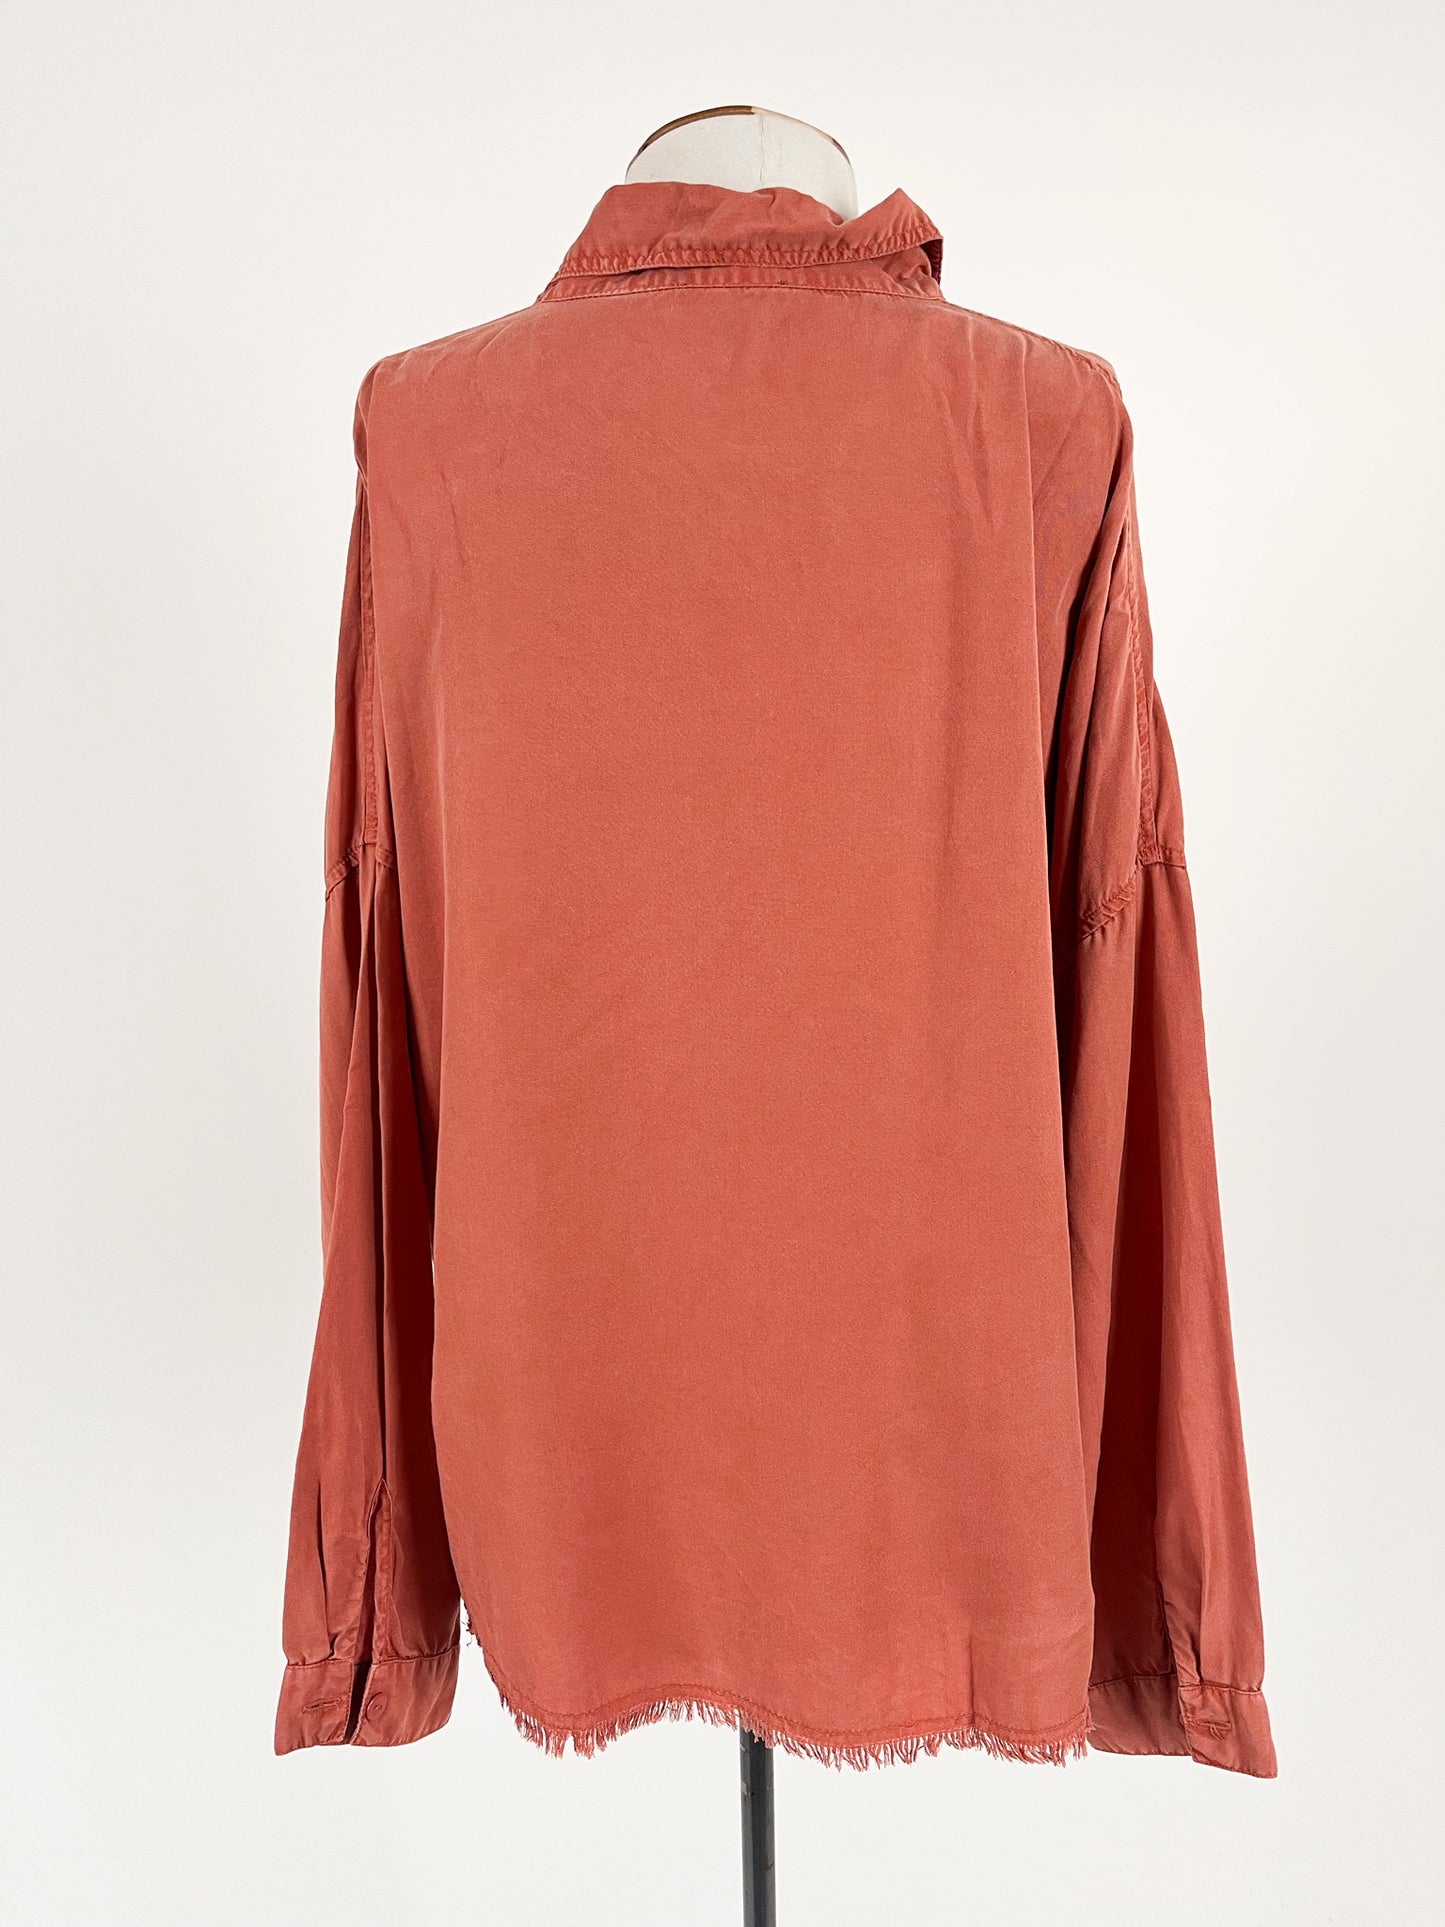 Cotton On | Orange Casual/Workwear Top | Size M